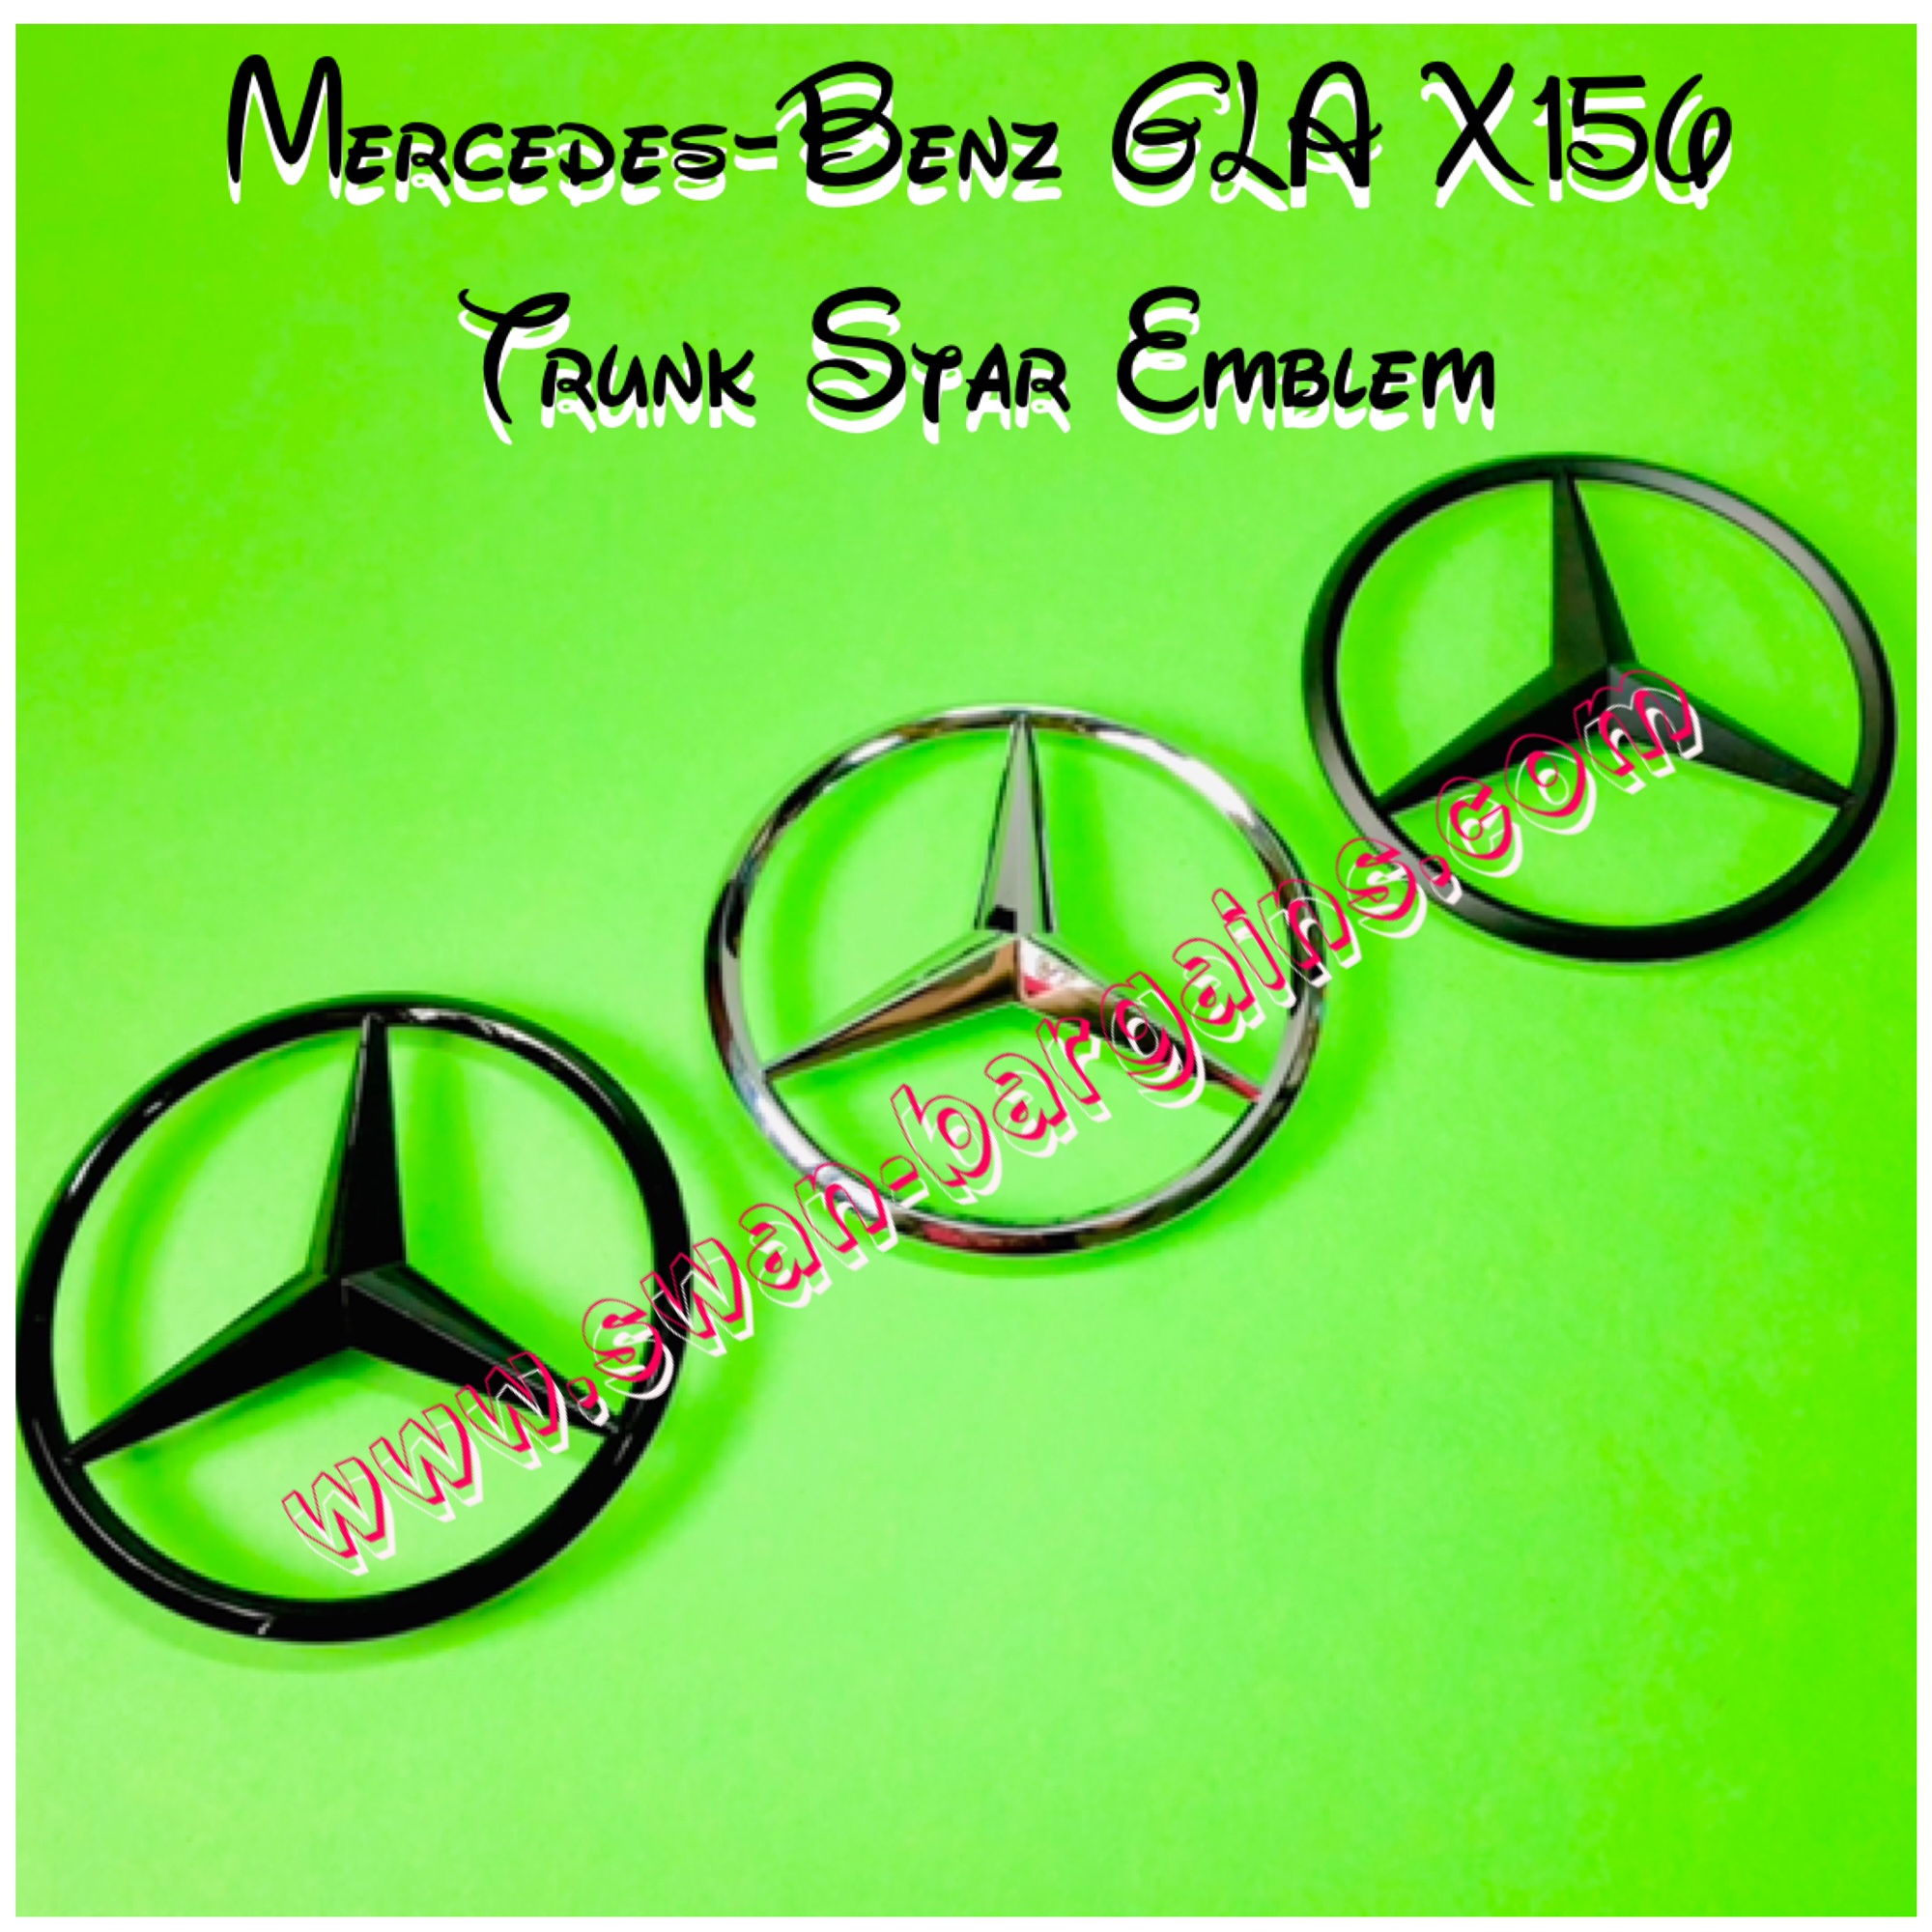 Benz GLA Class Trunk Star Replacement Emblem Singapore